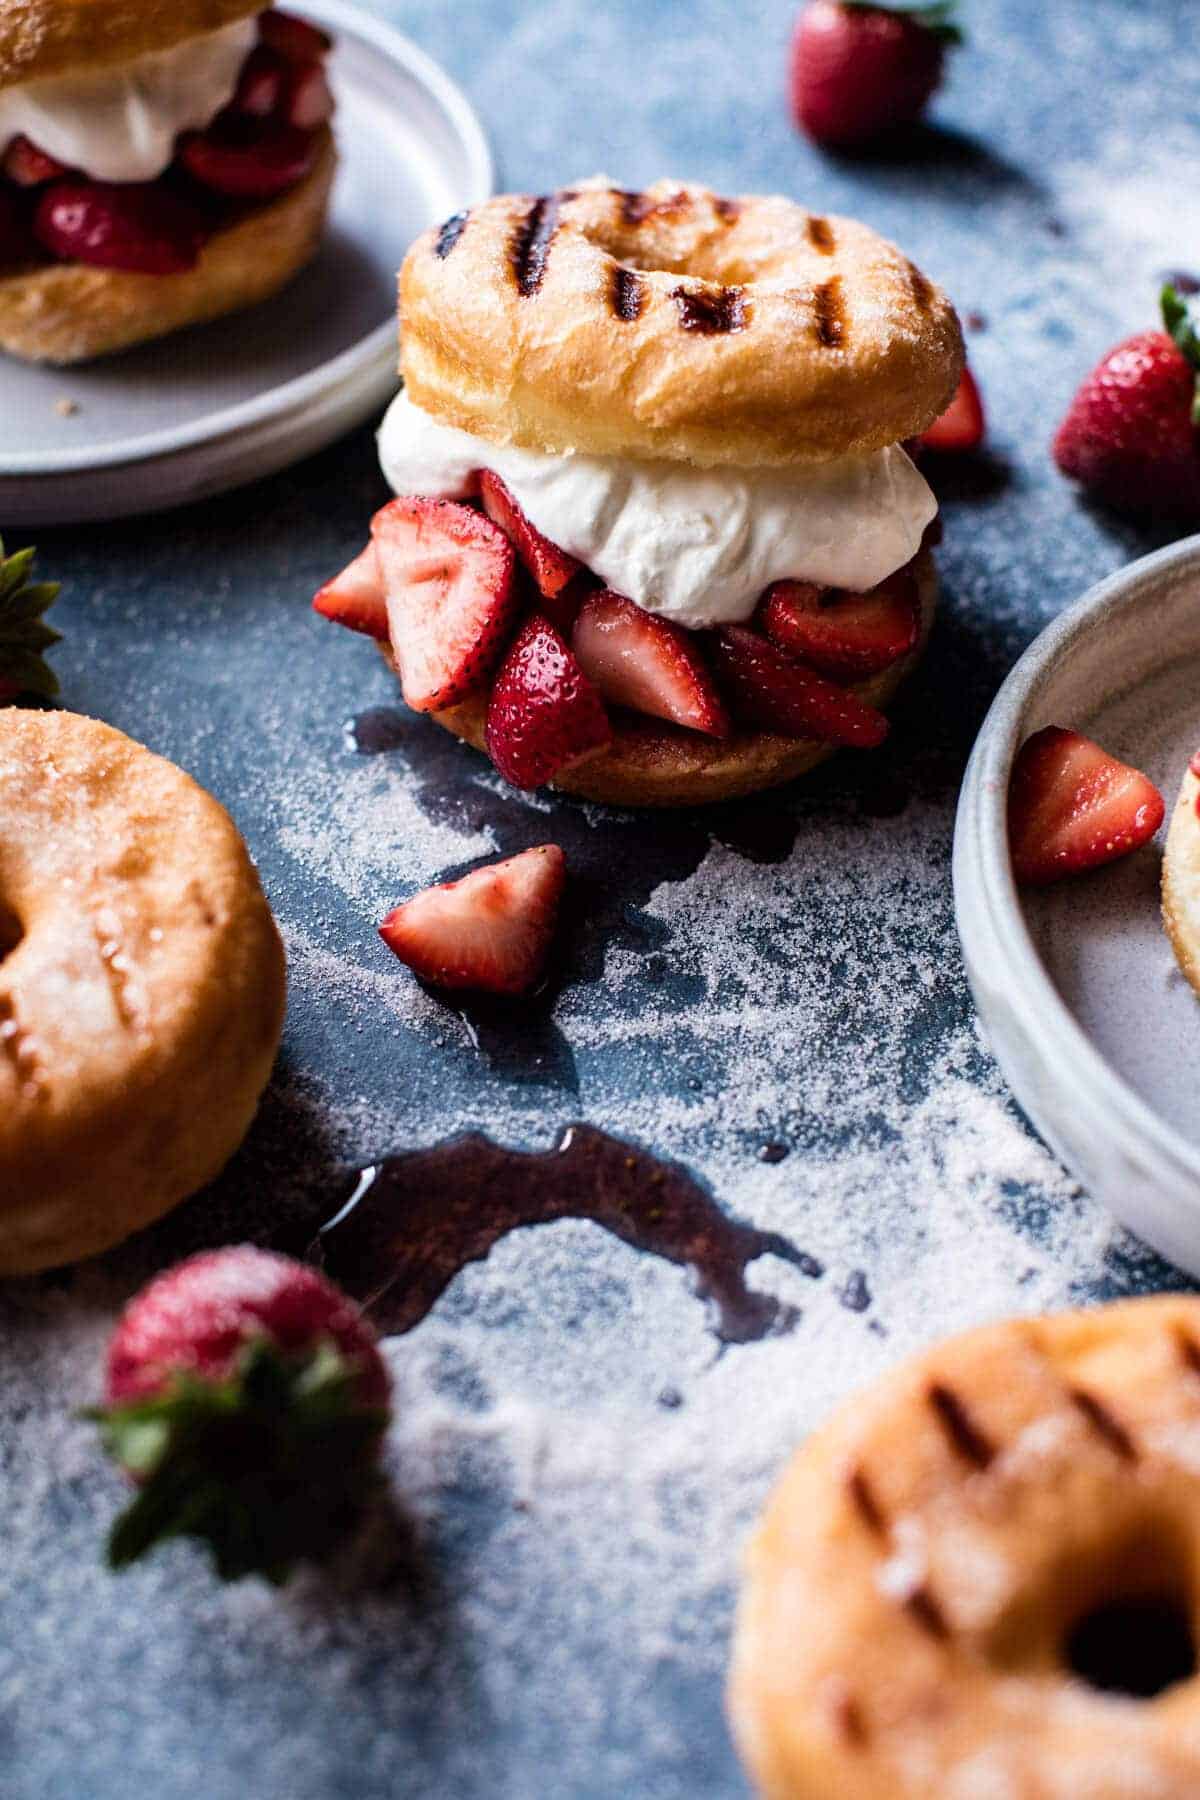 Strawberry Shortcake Grilled Doughnuts | halfbakedharvest.com @hbharvest